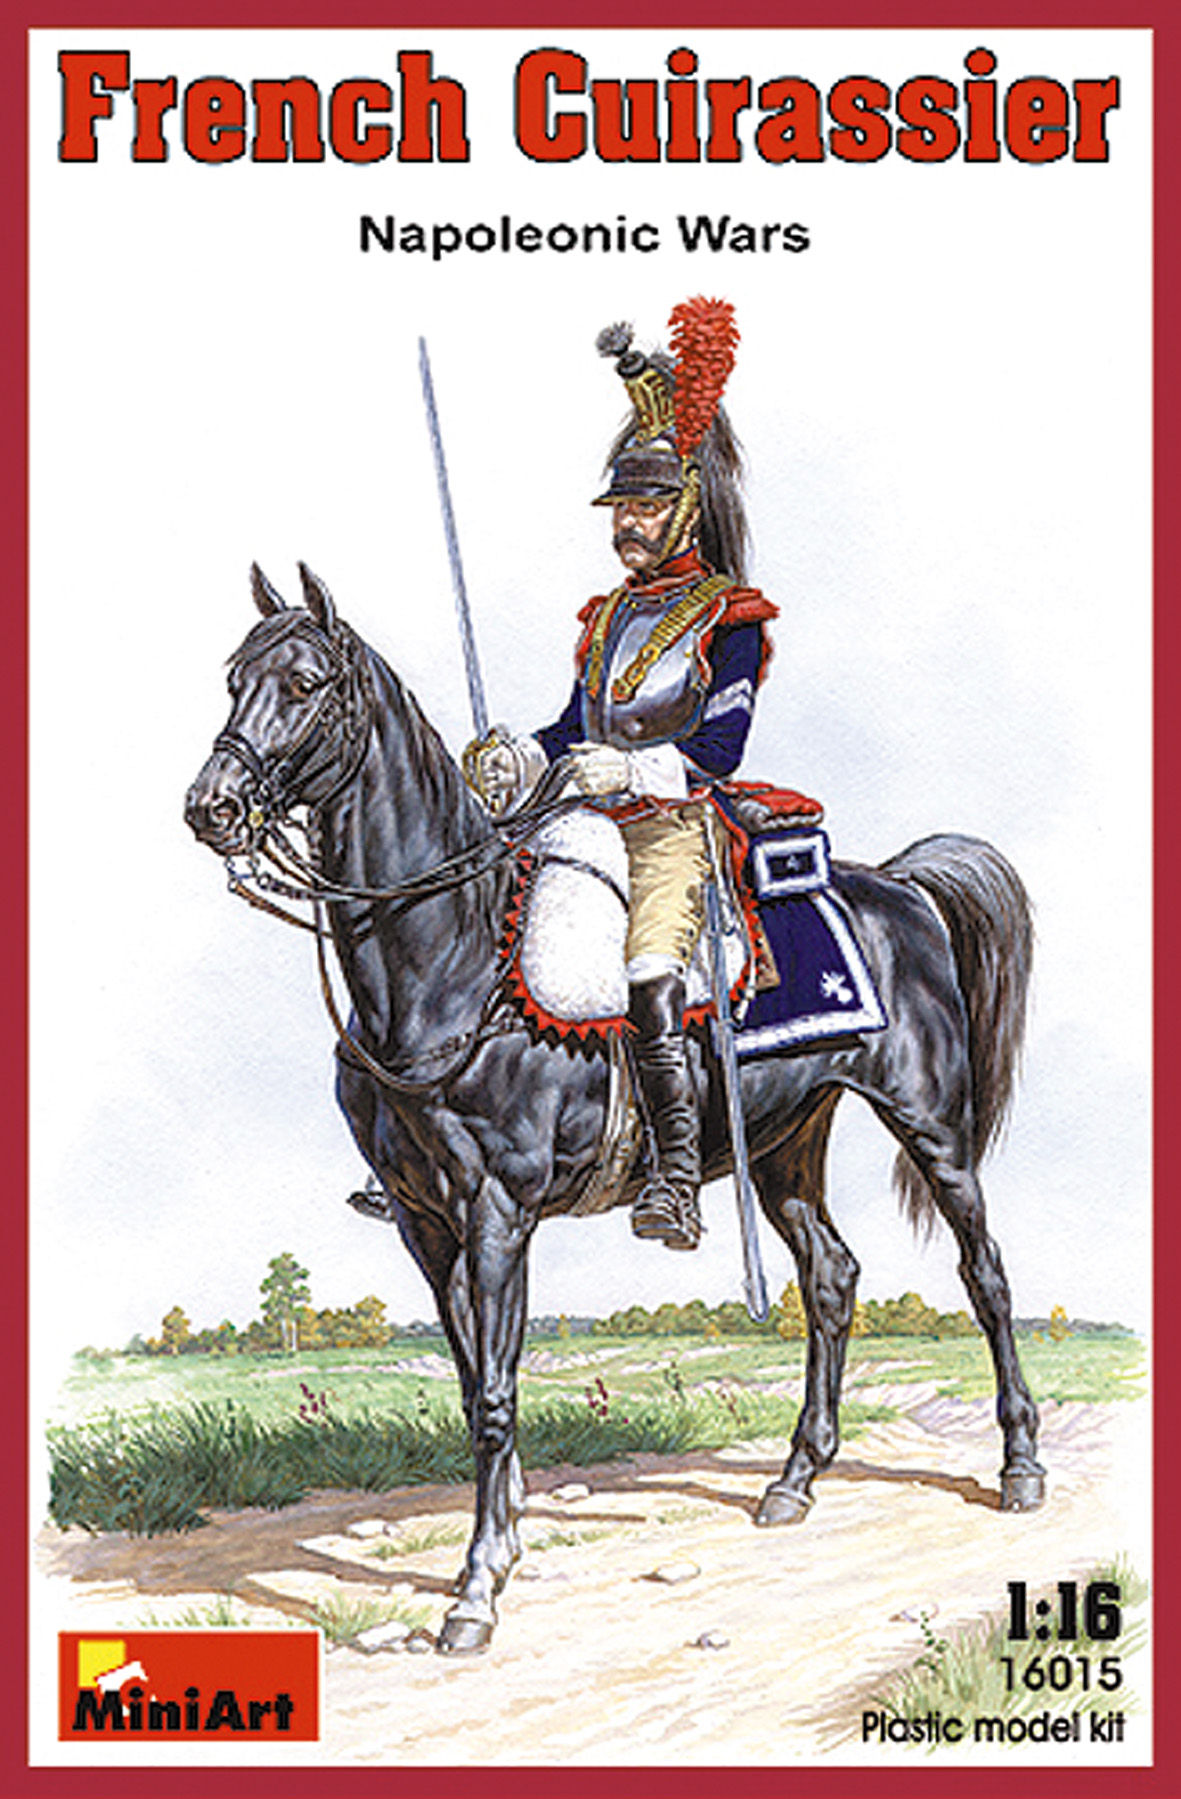 Miniart 16015 - 1:16 French Cuirassier Napoleonic Wars